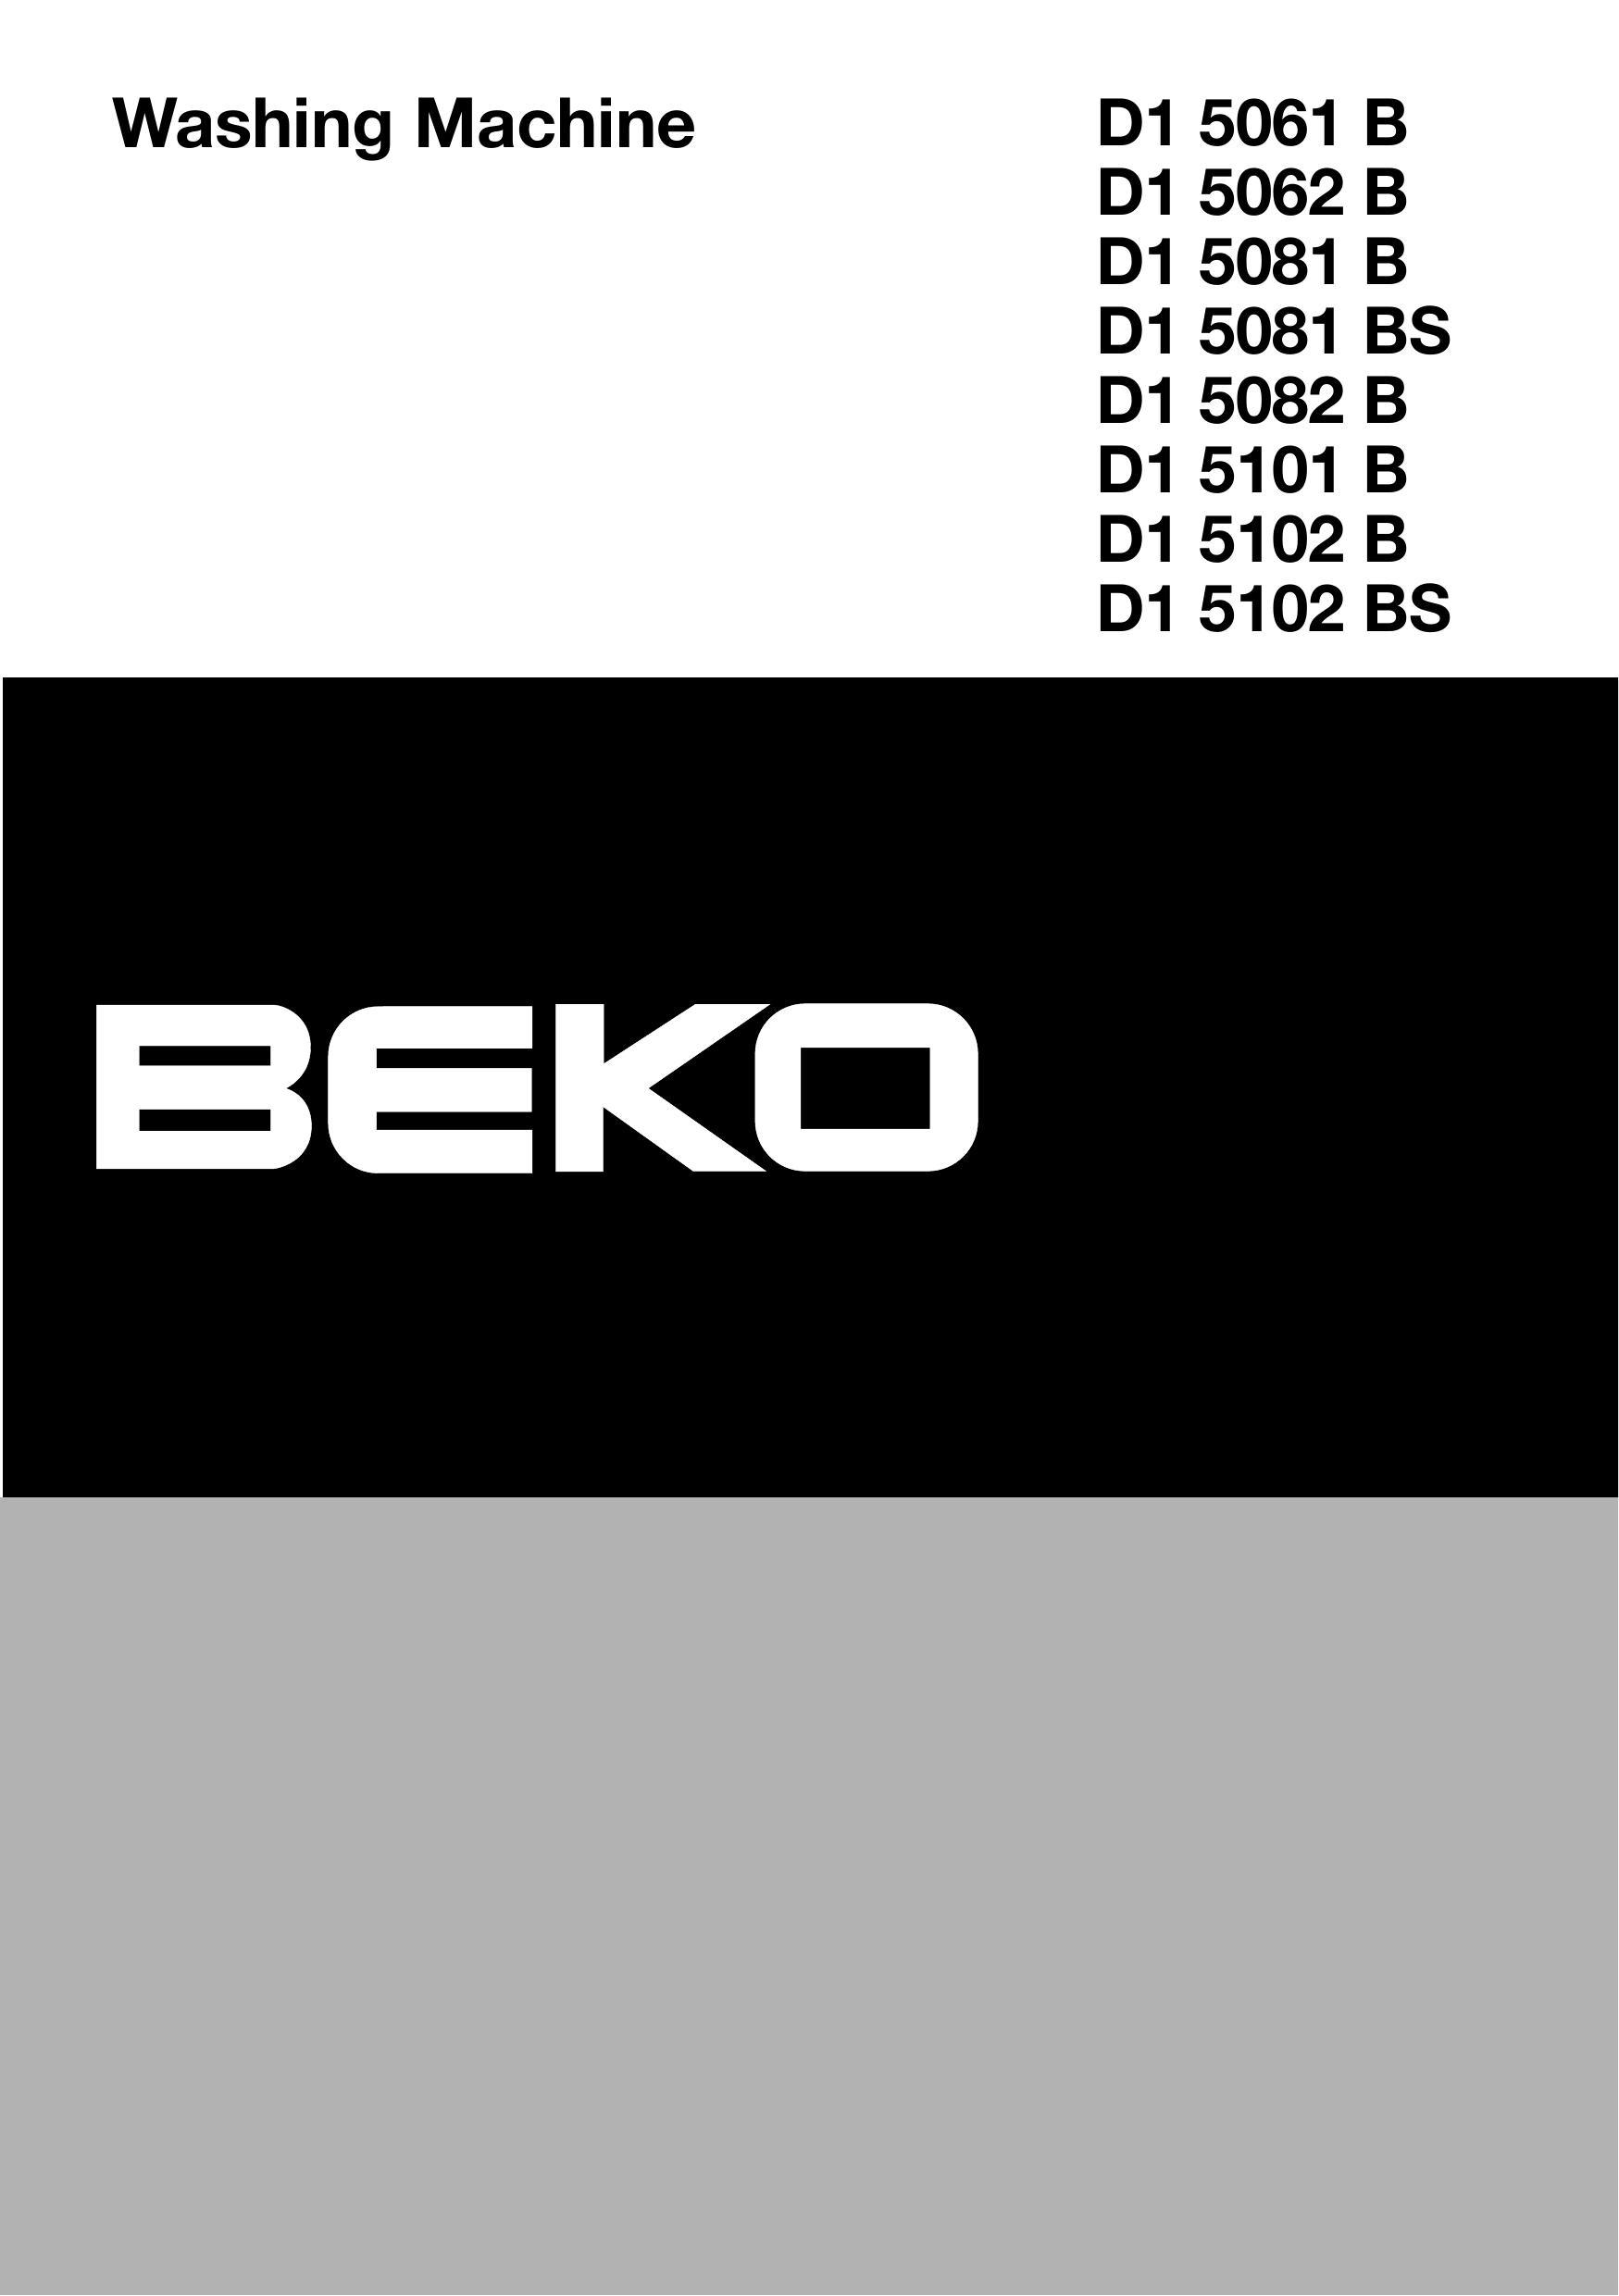 Beko D1 5062 B Washer User Manual